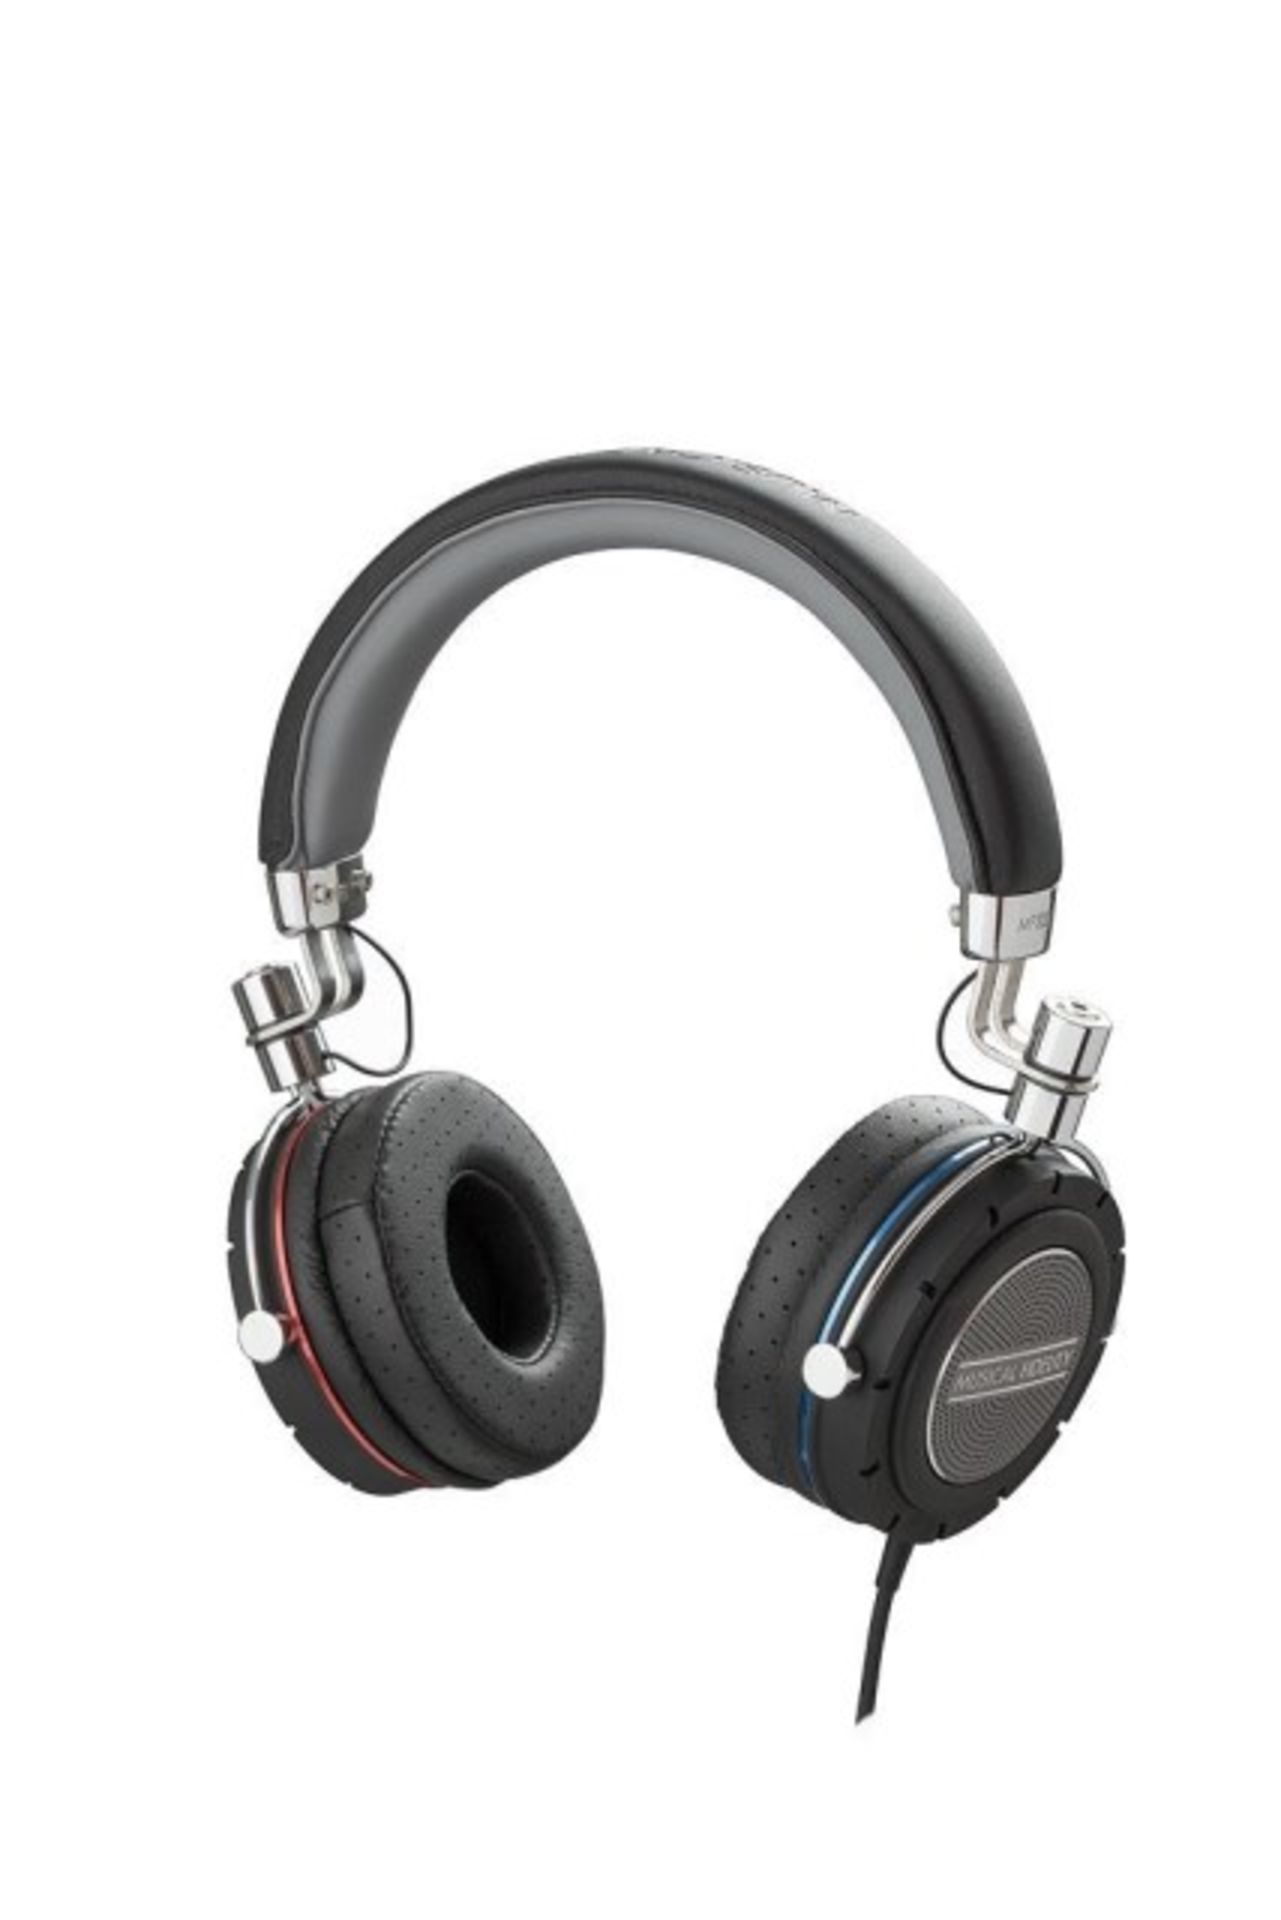 V *TRADE QTY* Brand New Musical Fidelity MF-200 Headphones (Brand New & Sealed) RRP £249 X 4 Bid